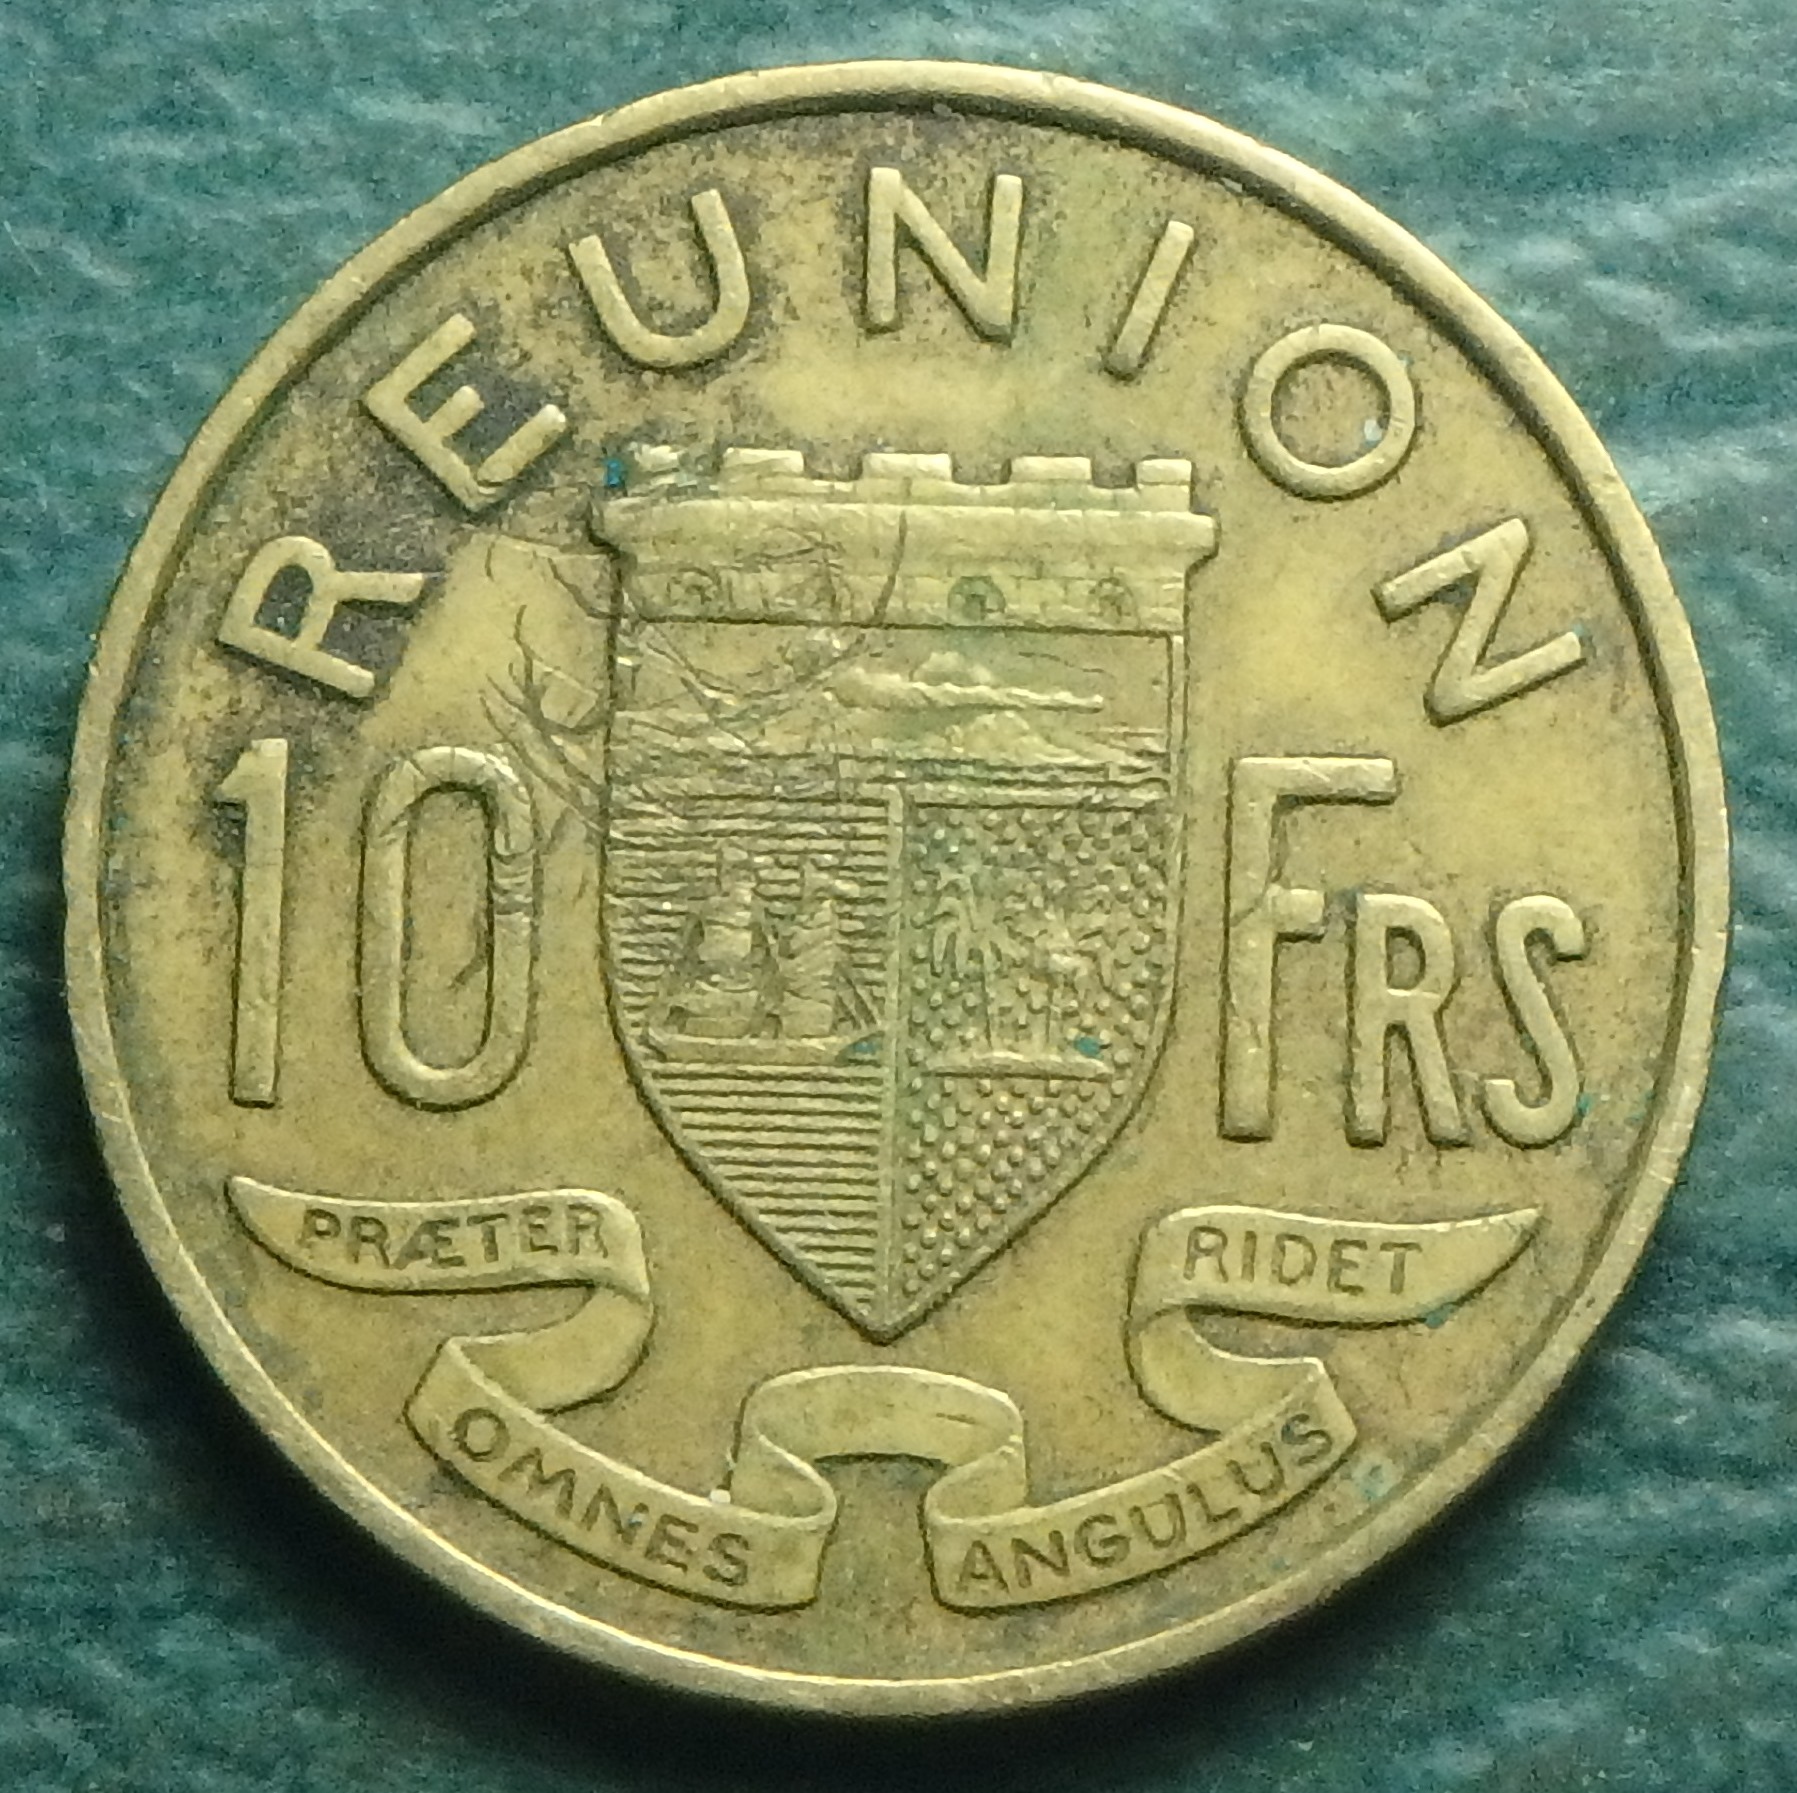 1970FR-Reunion 10 f rev.JPG